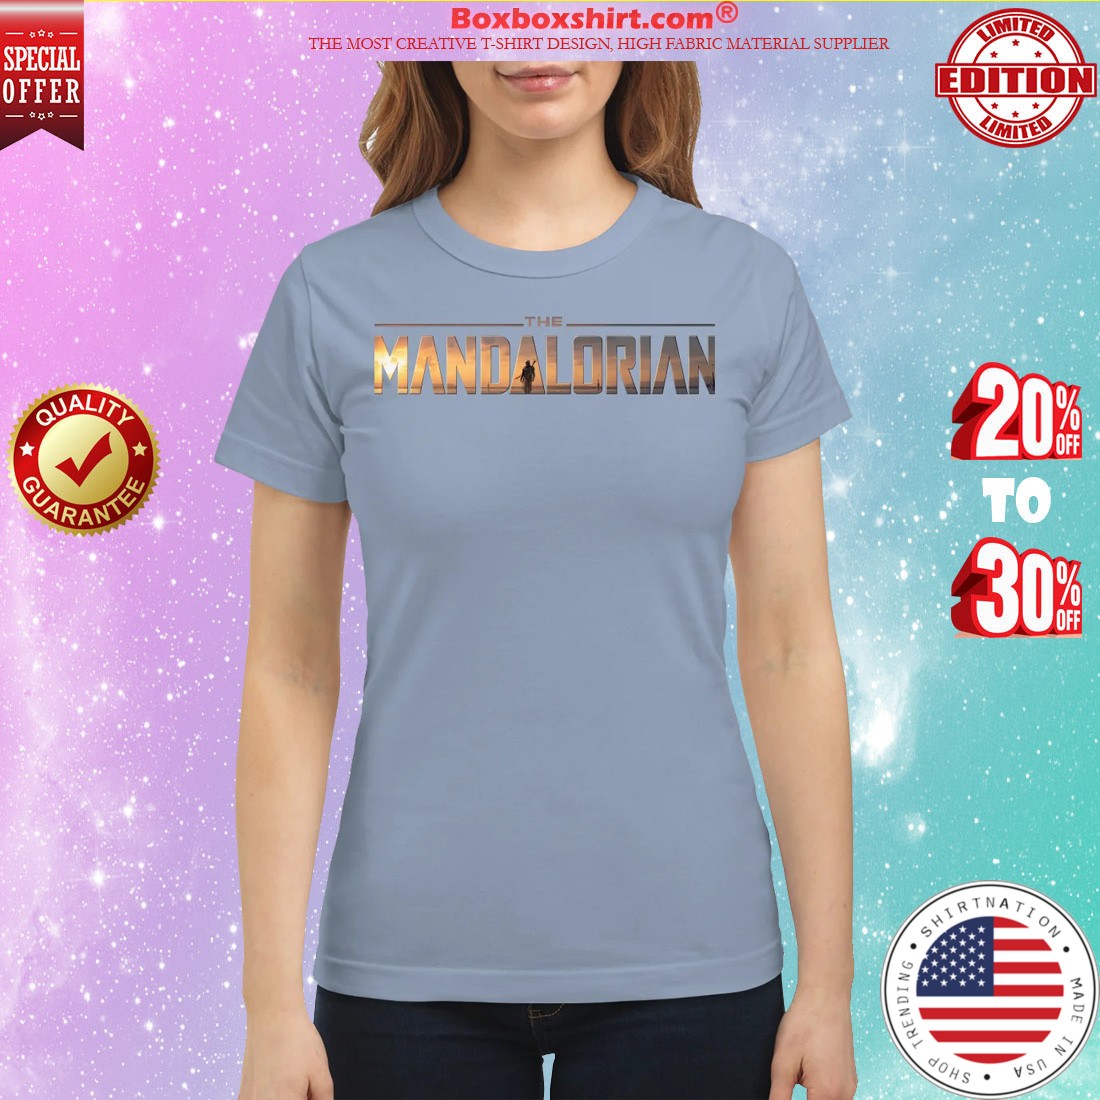 The mandalorian star wars shirt